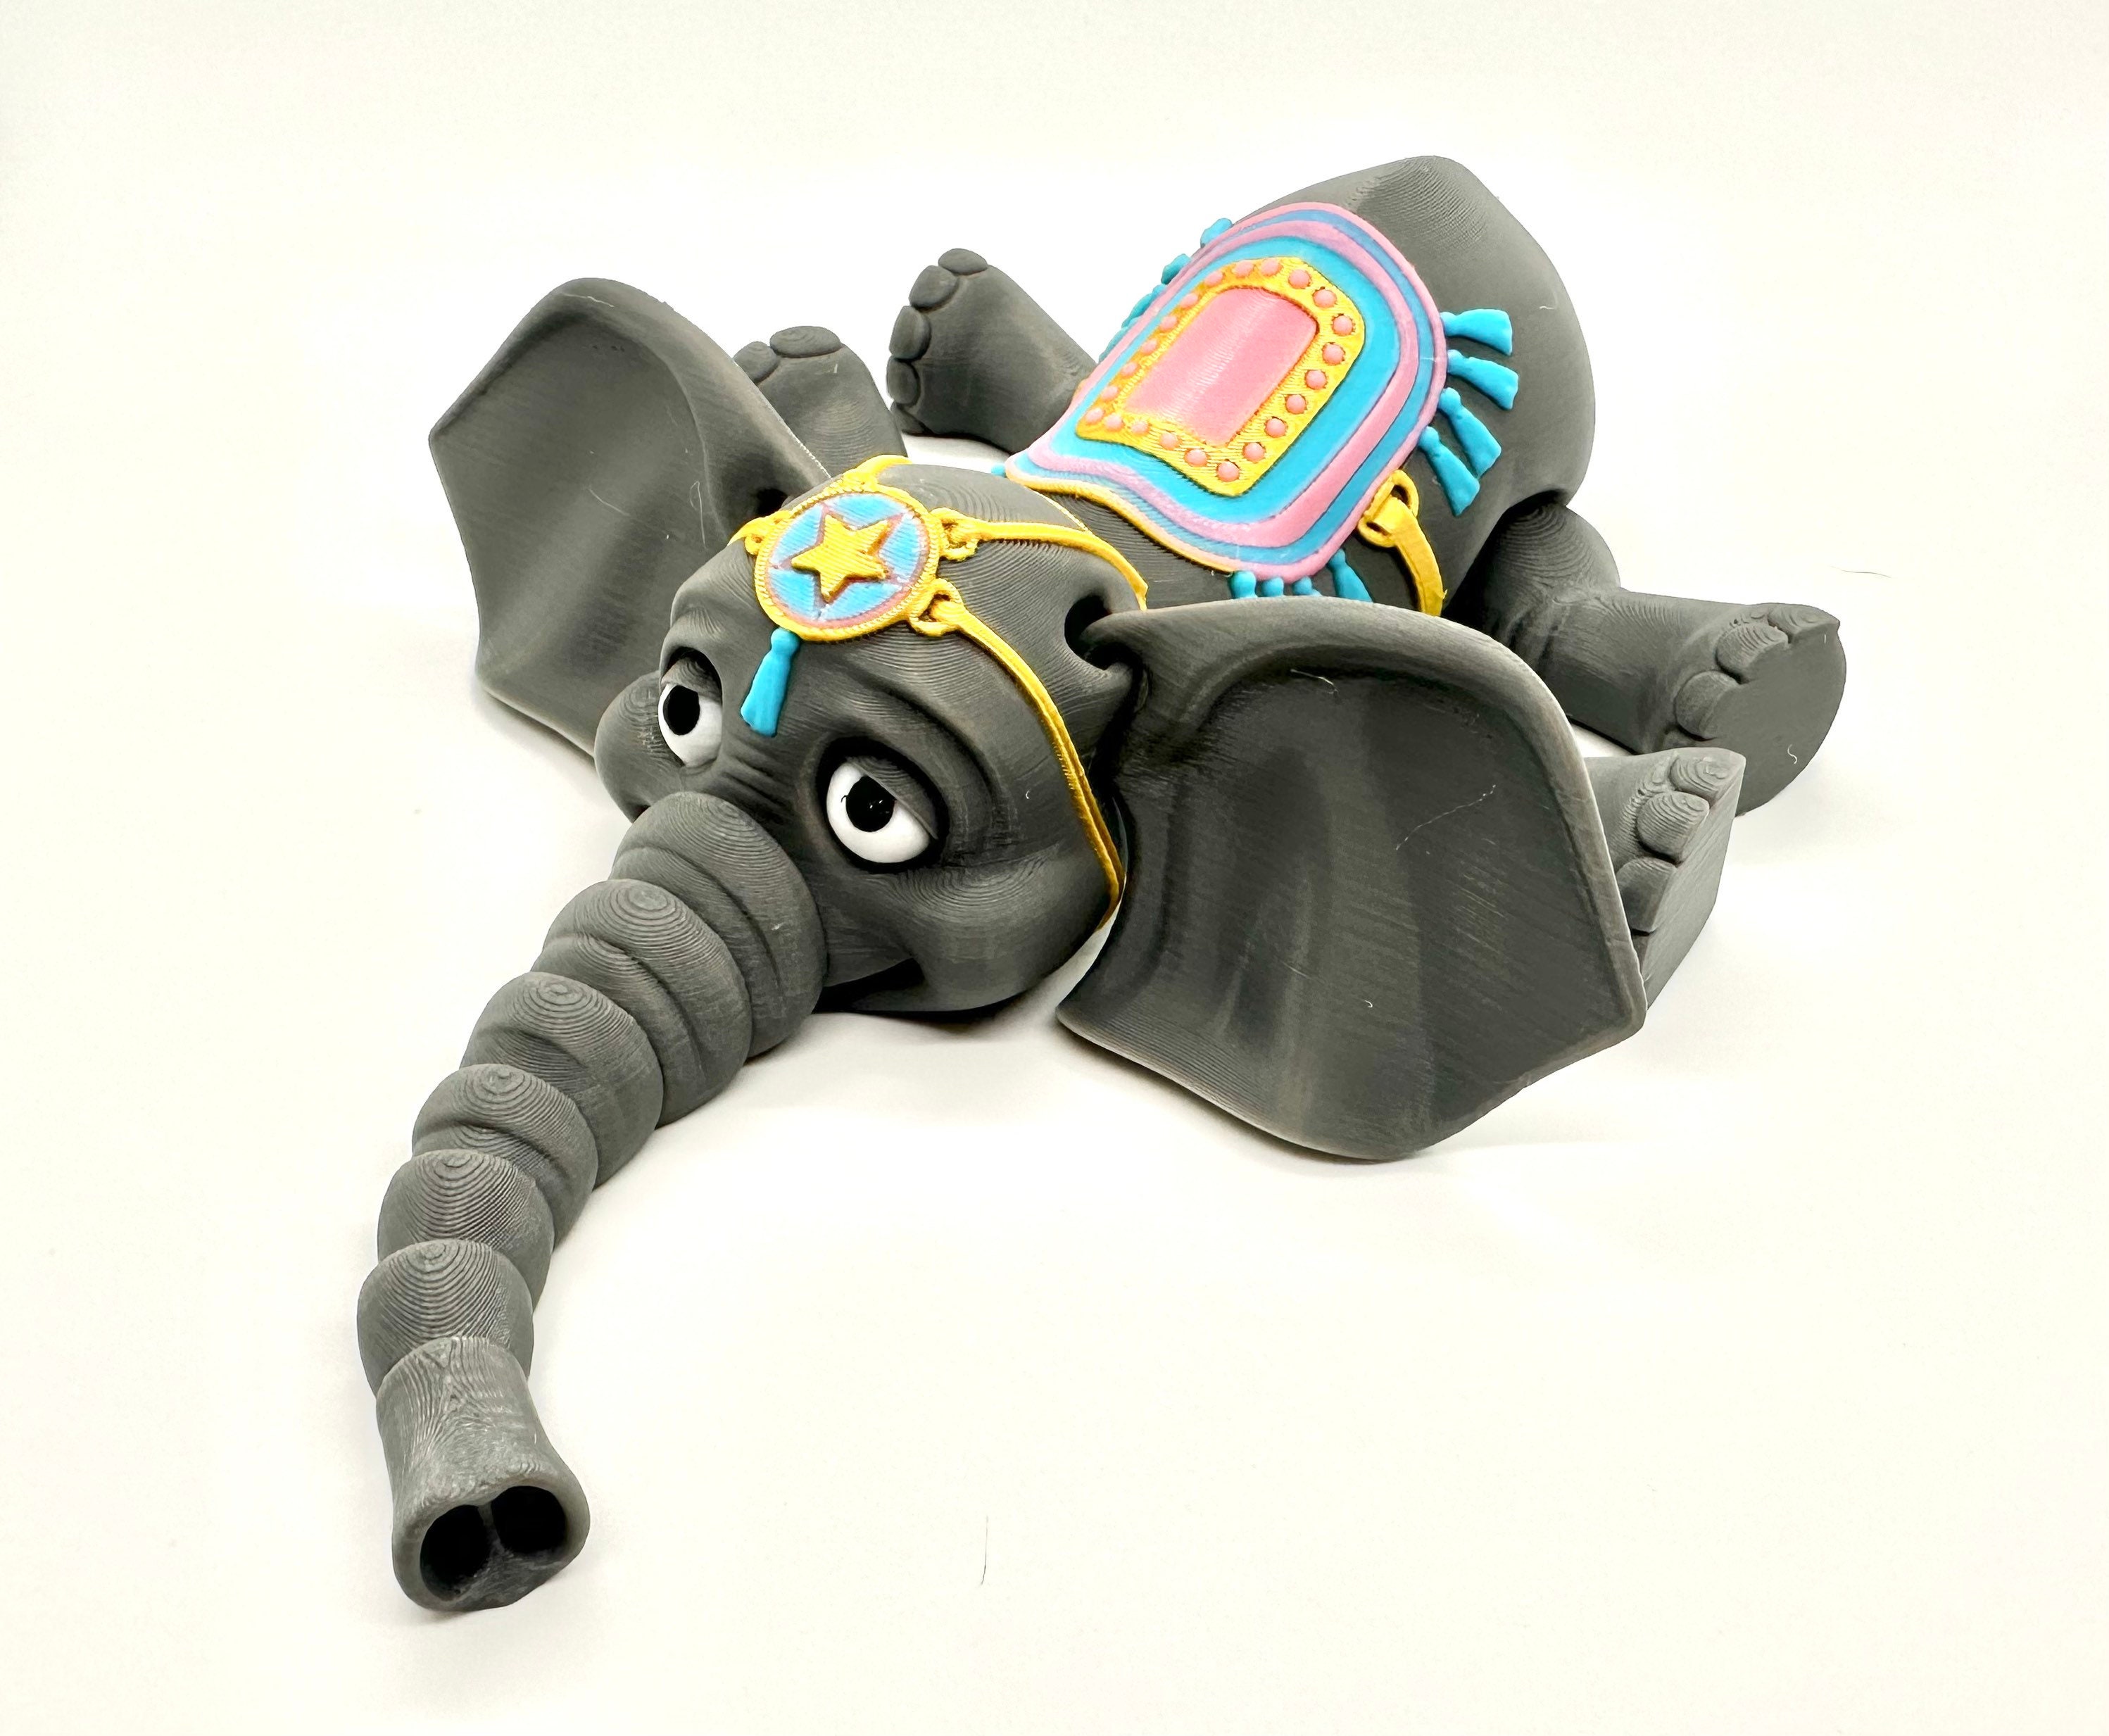 3D Printed Articulating Elephant & Ball Flexible Sensory Toy Gadget